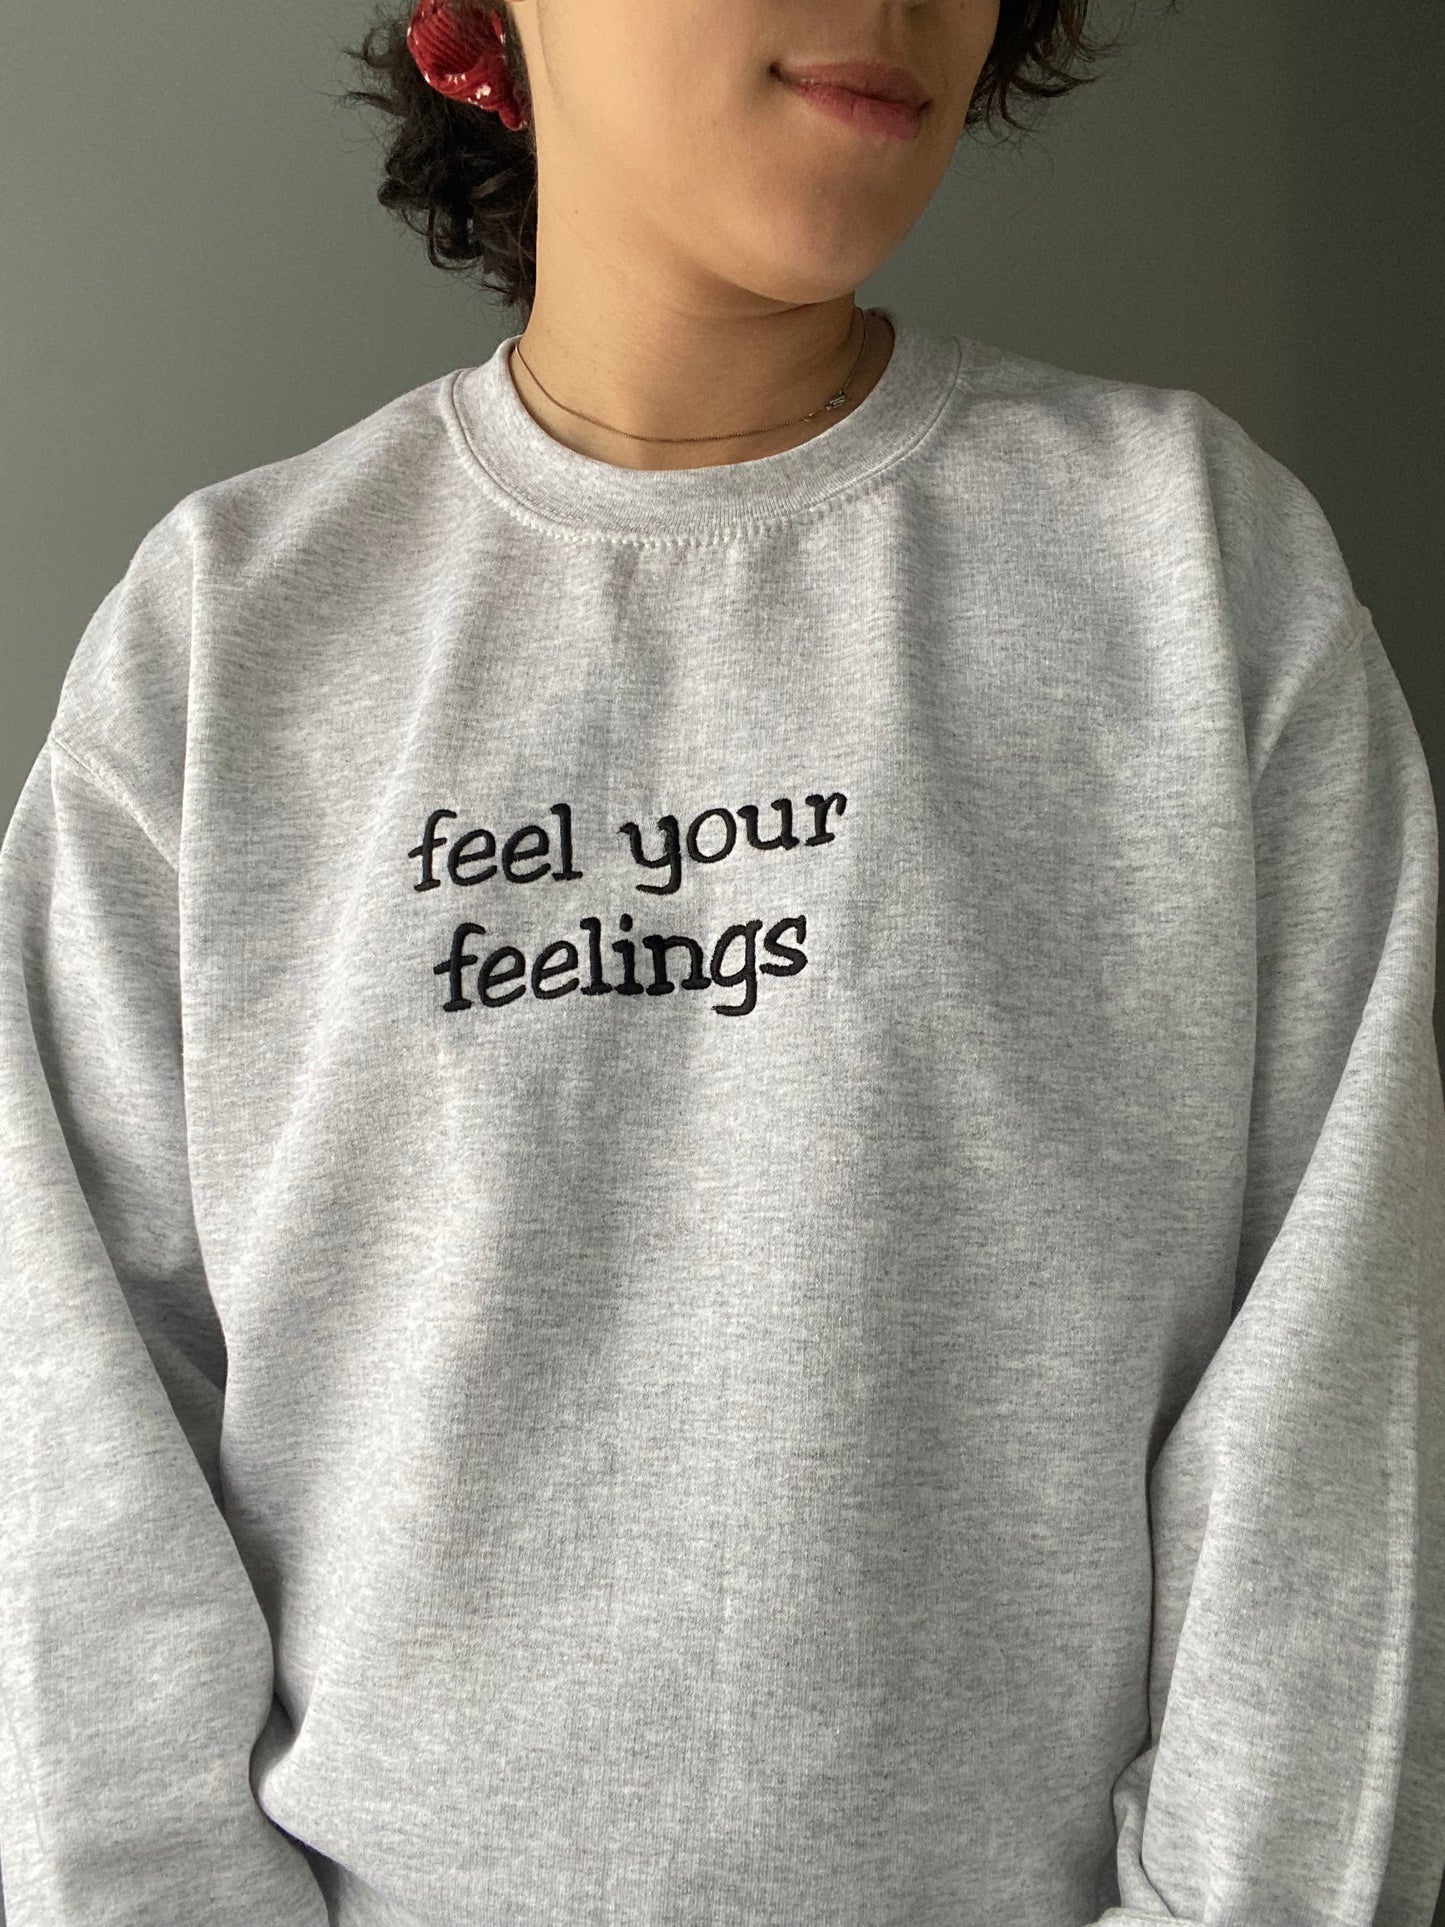 feel your feelings mental health apparel